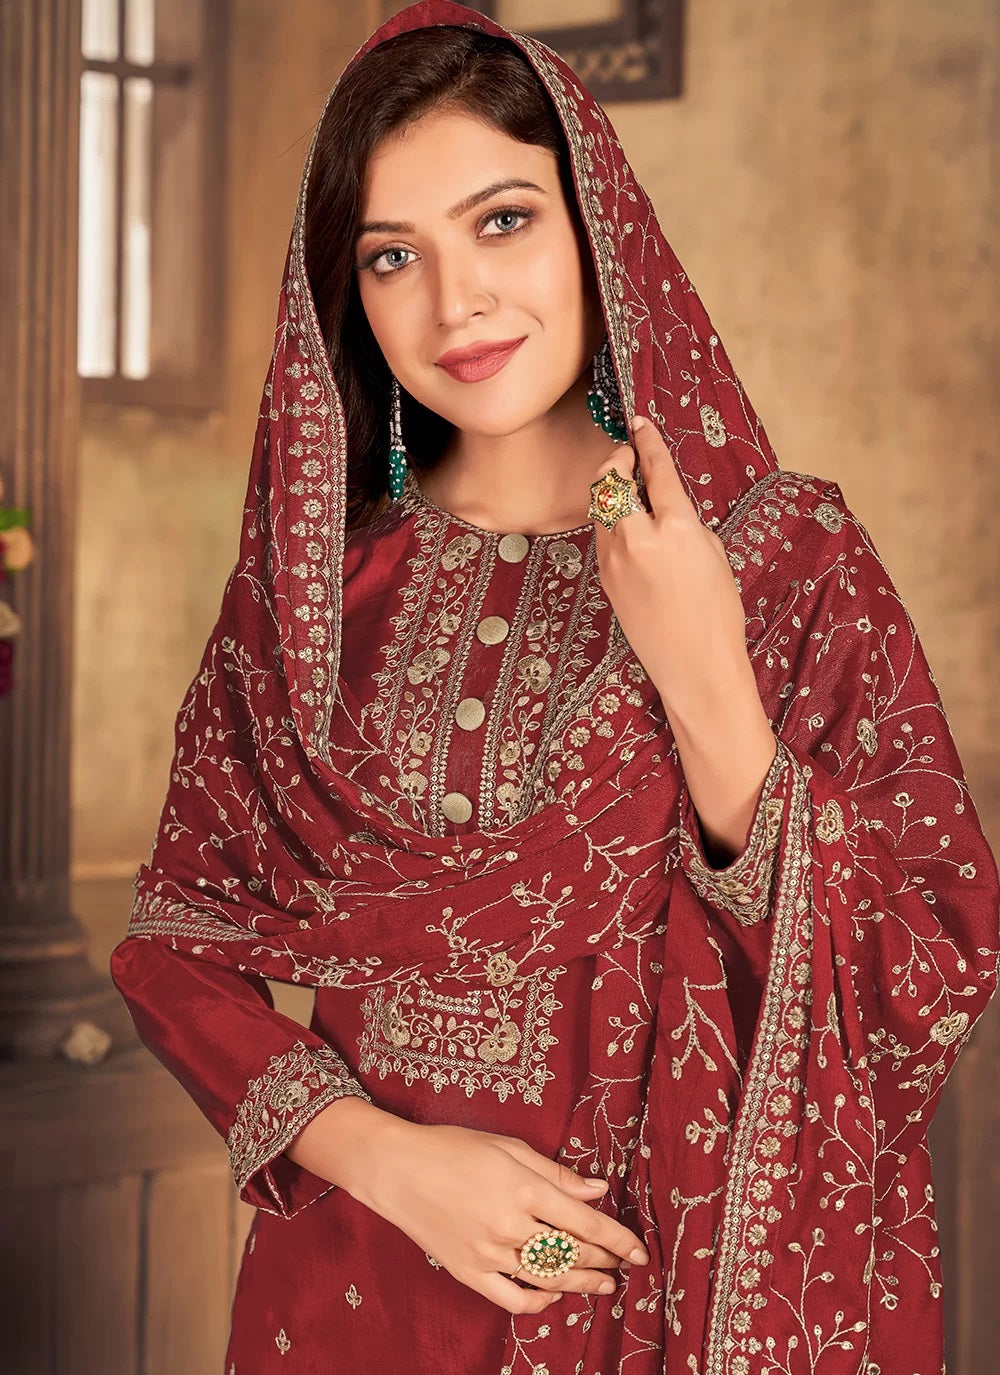 Luxurious Maroon Silk Salwar Kameez with Handcrafted Dori Embroidery